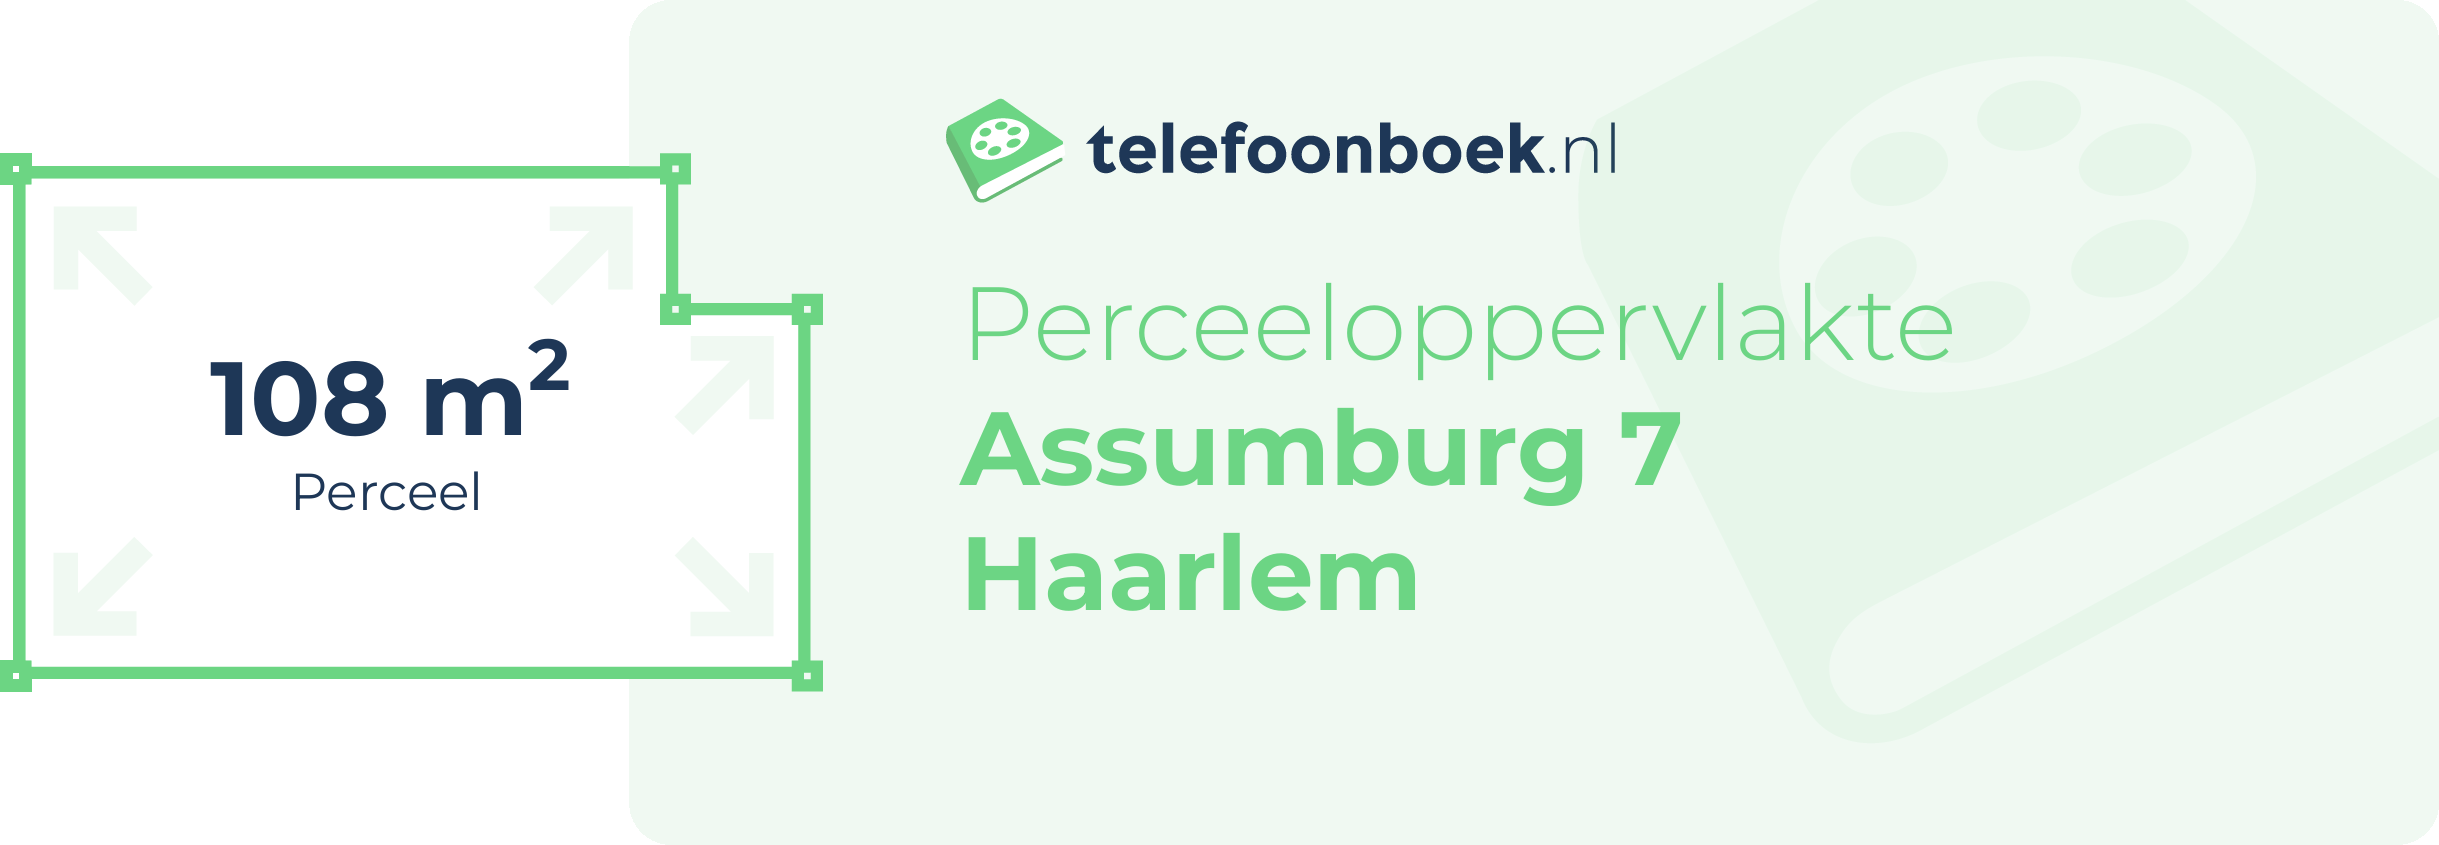 Perceeloppervlakte Assumburg 7 Haarlem